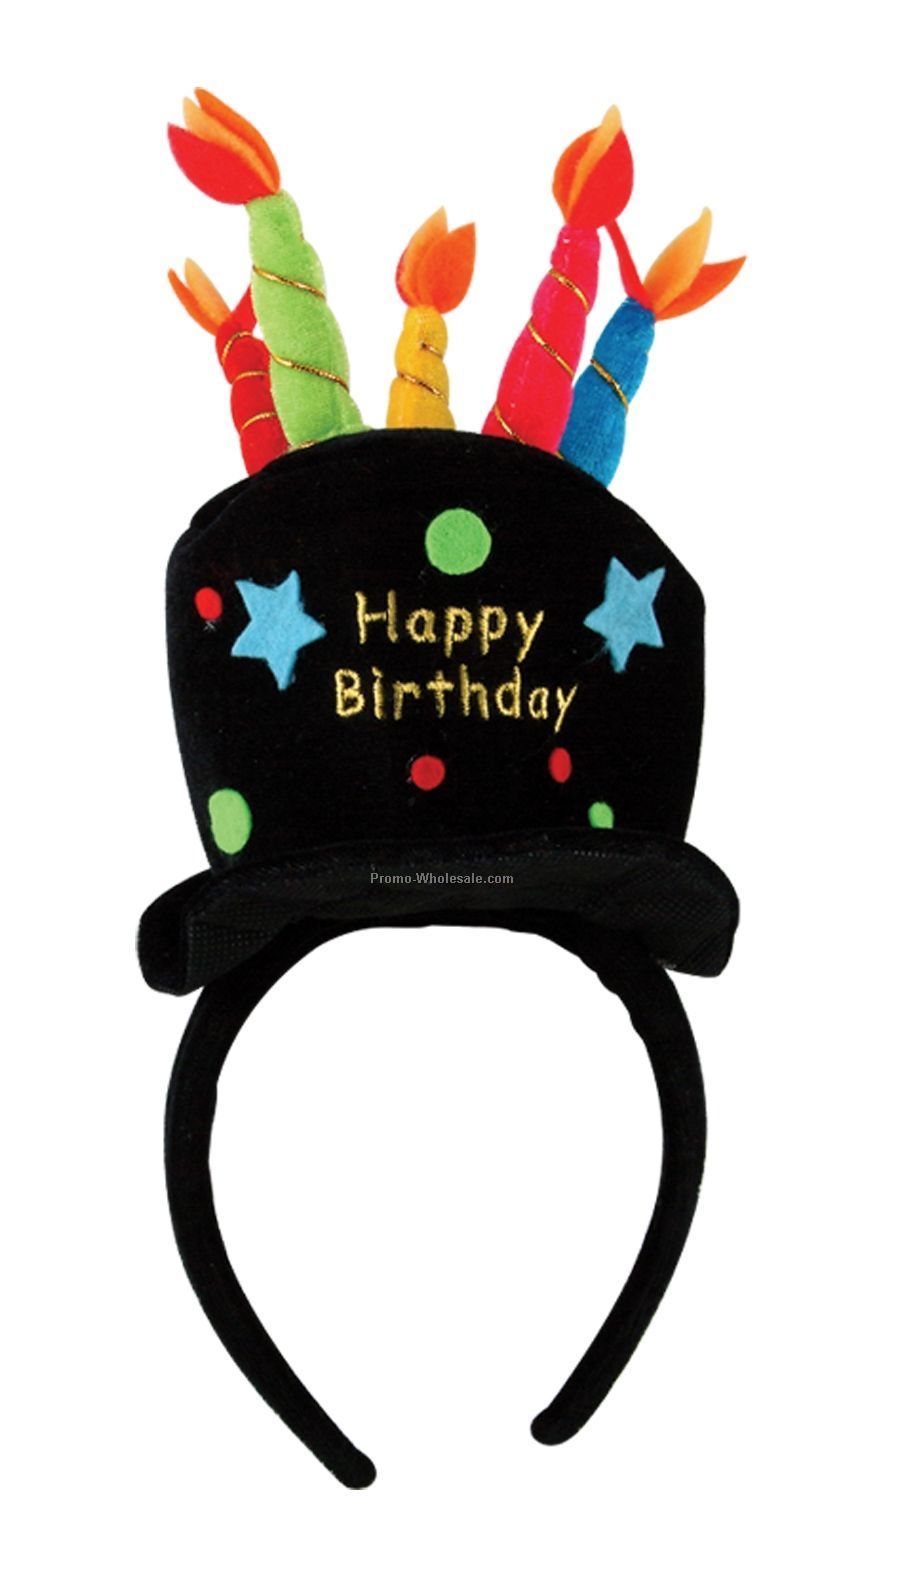 Happy Birthday Headband (1 Size Fits Most)